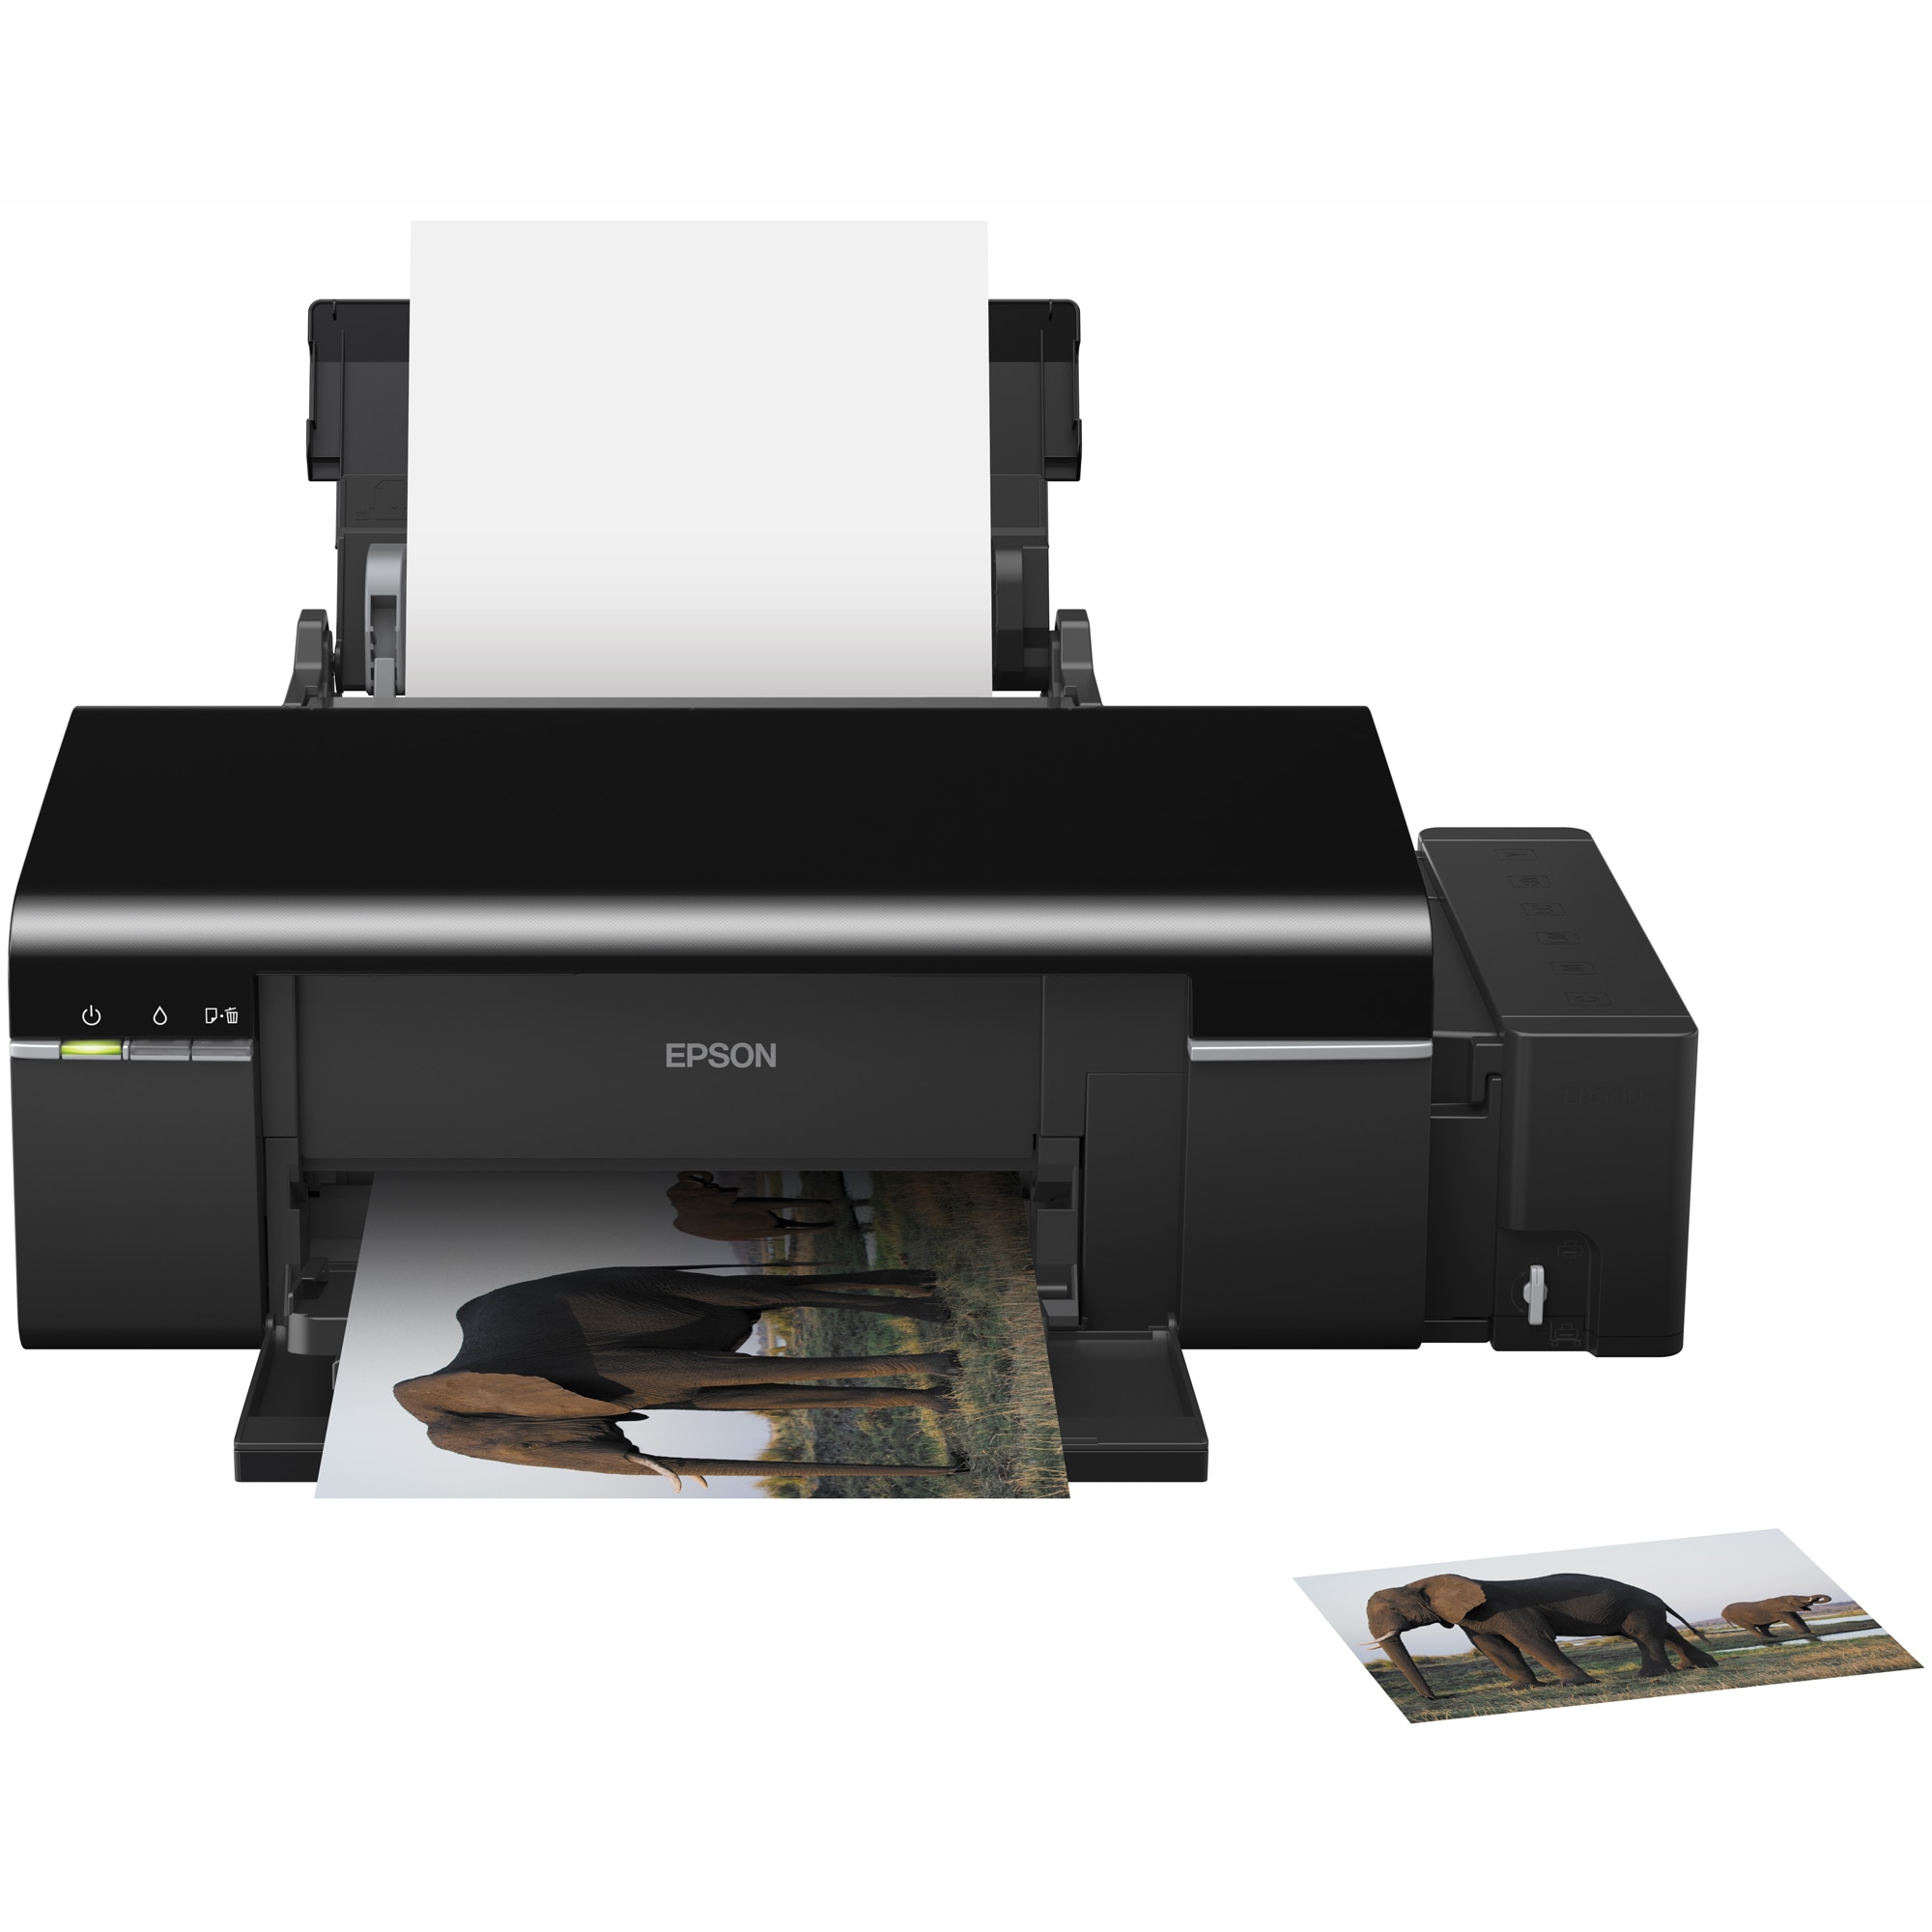  Epson  L800 Imprimanta inkjet  A4 eMAG ro